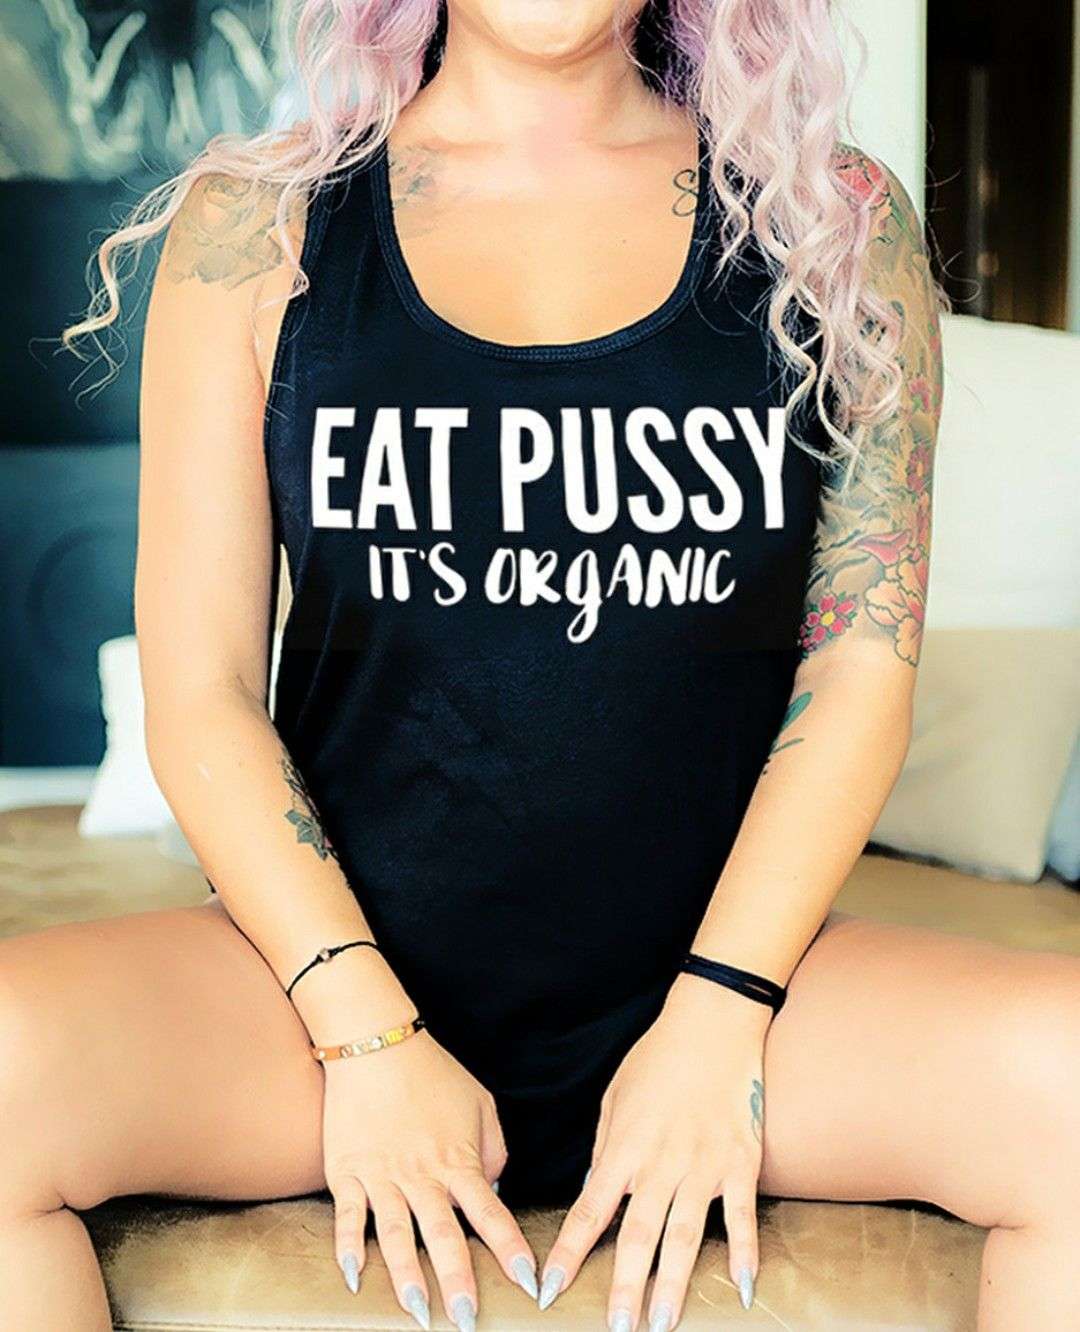 Eat pussy It's organic - Organic pussy eating, organic pussy